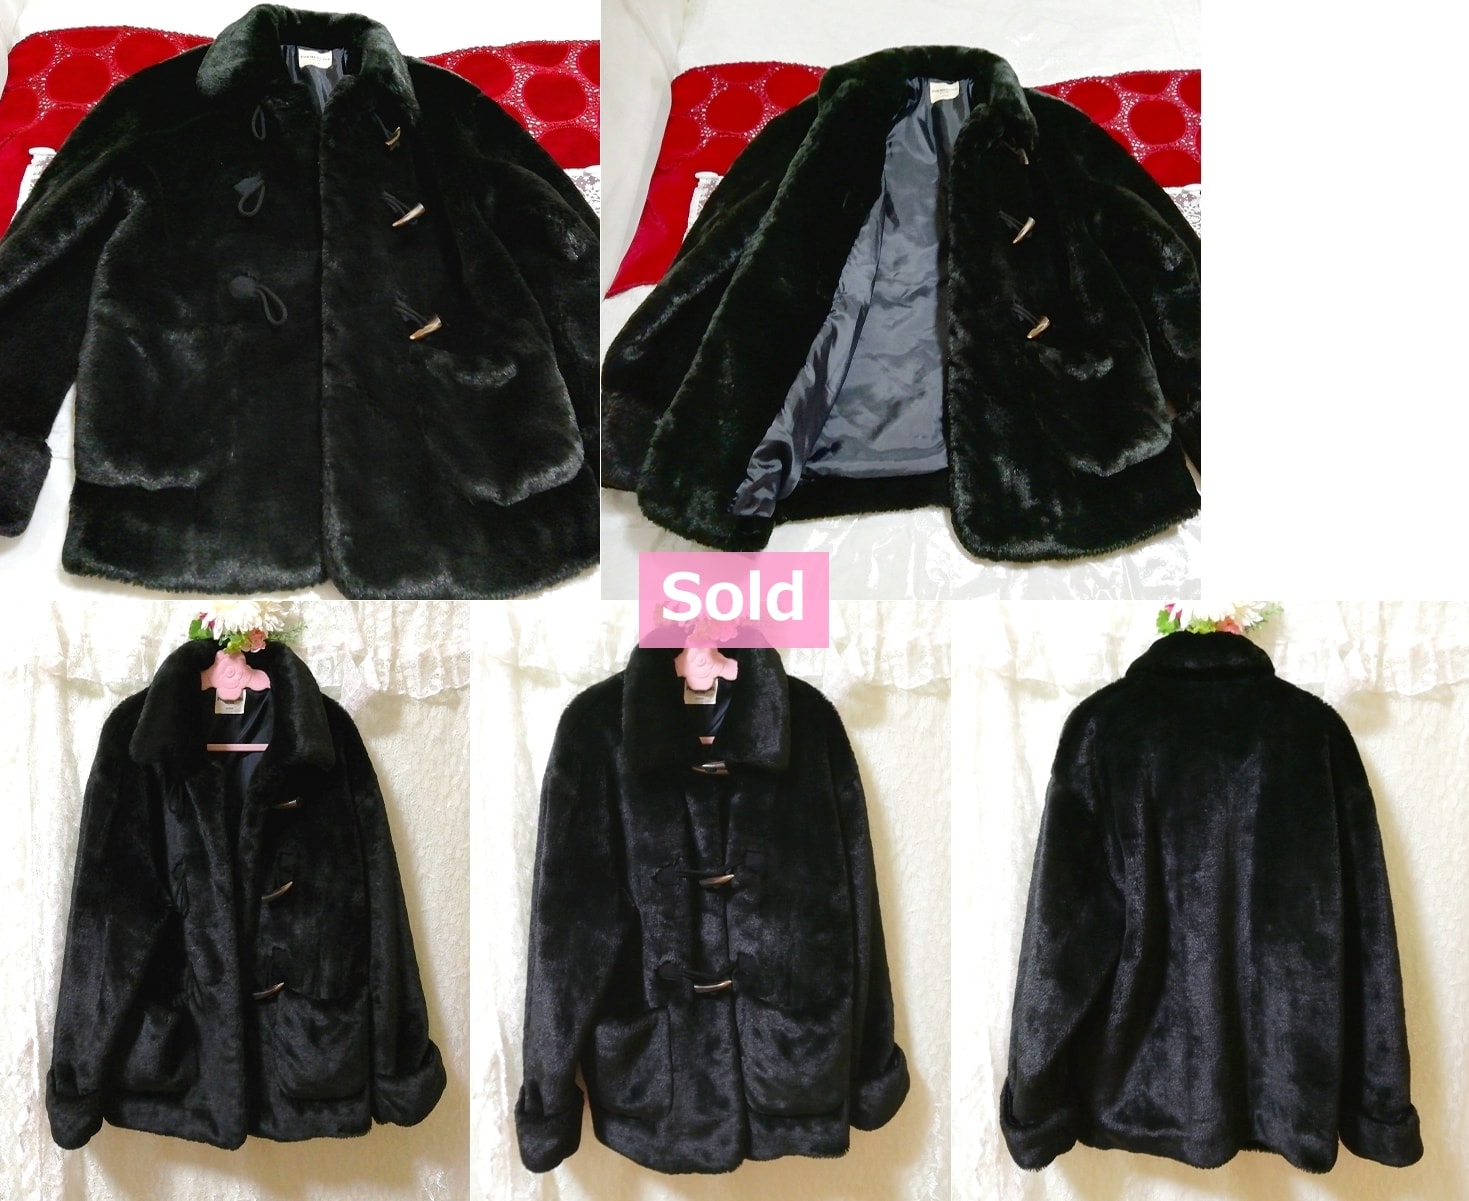 Formengirl formengirl black fluffy duffel coat, coat, coat in general, medium size